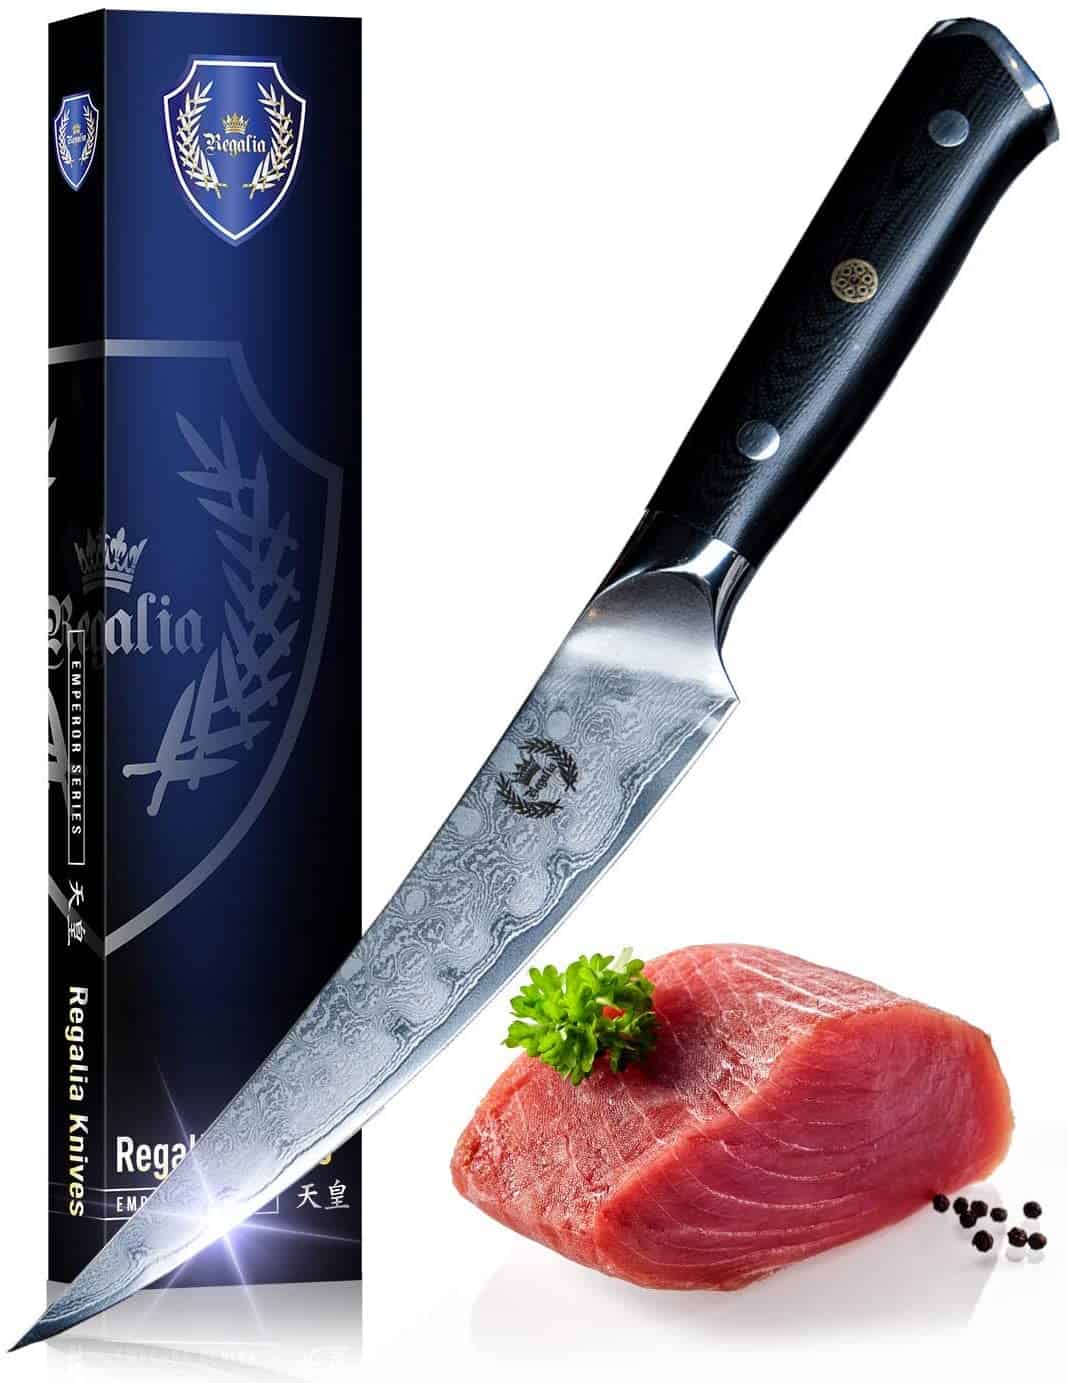 Best AUS 10 Japanese steel boning knife- Regalia Boning : Fillet Knife